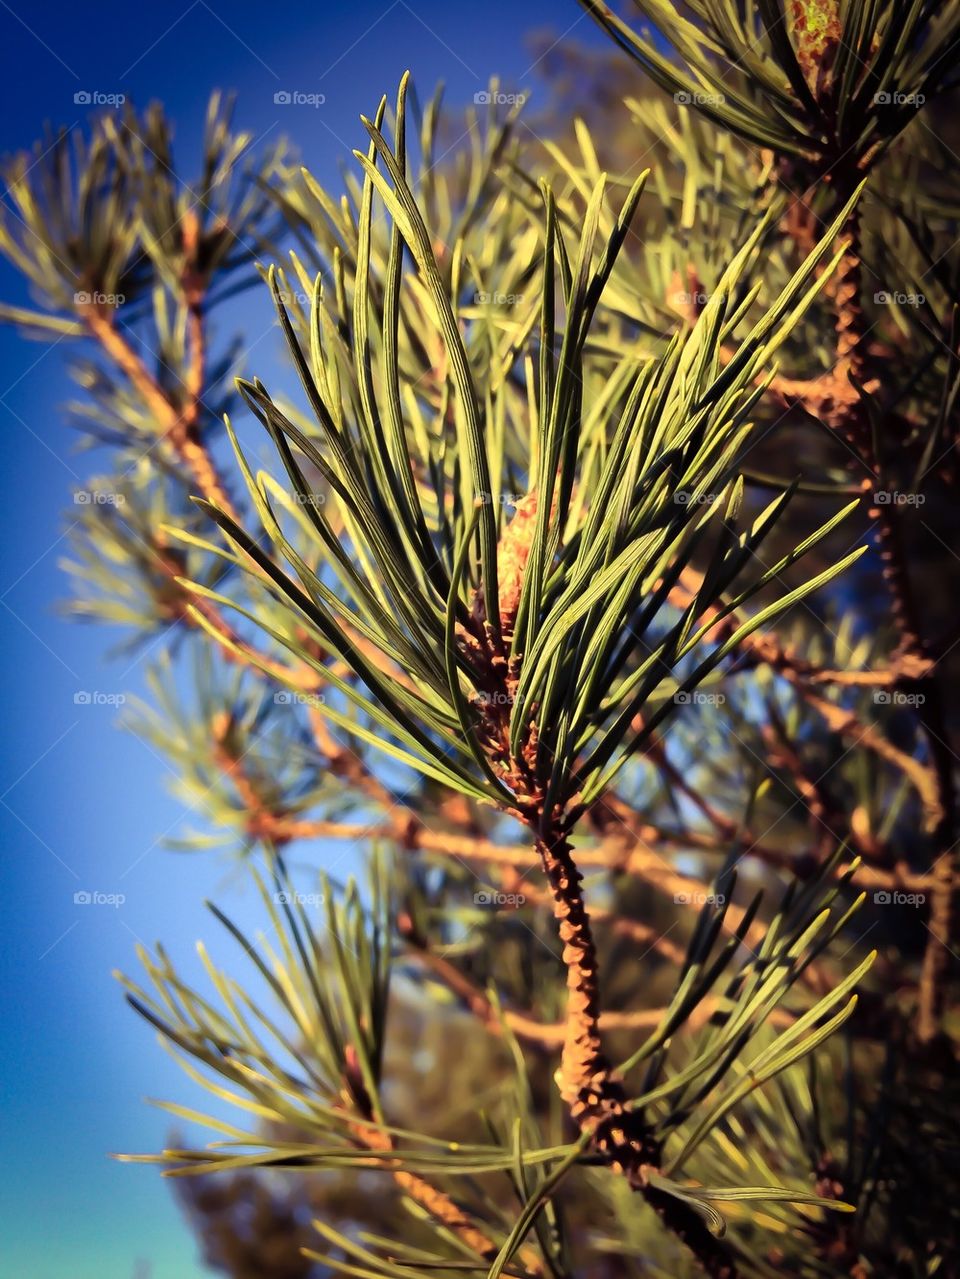 Pine needle